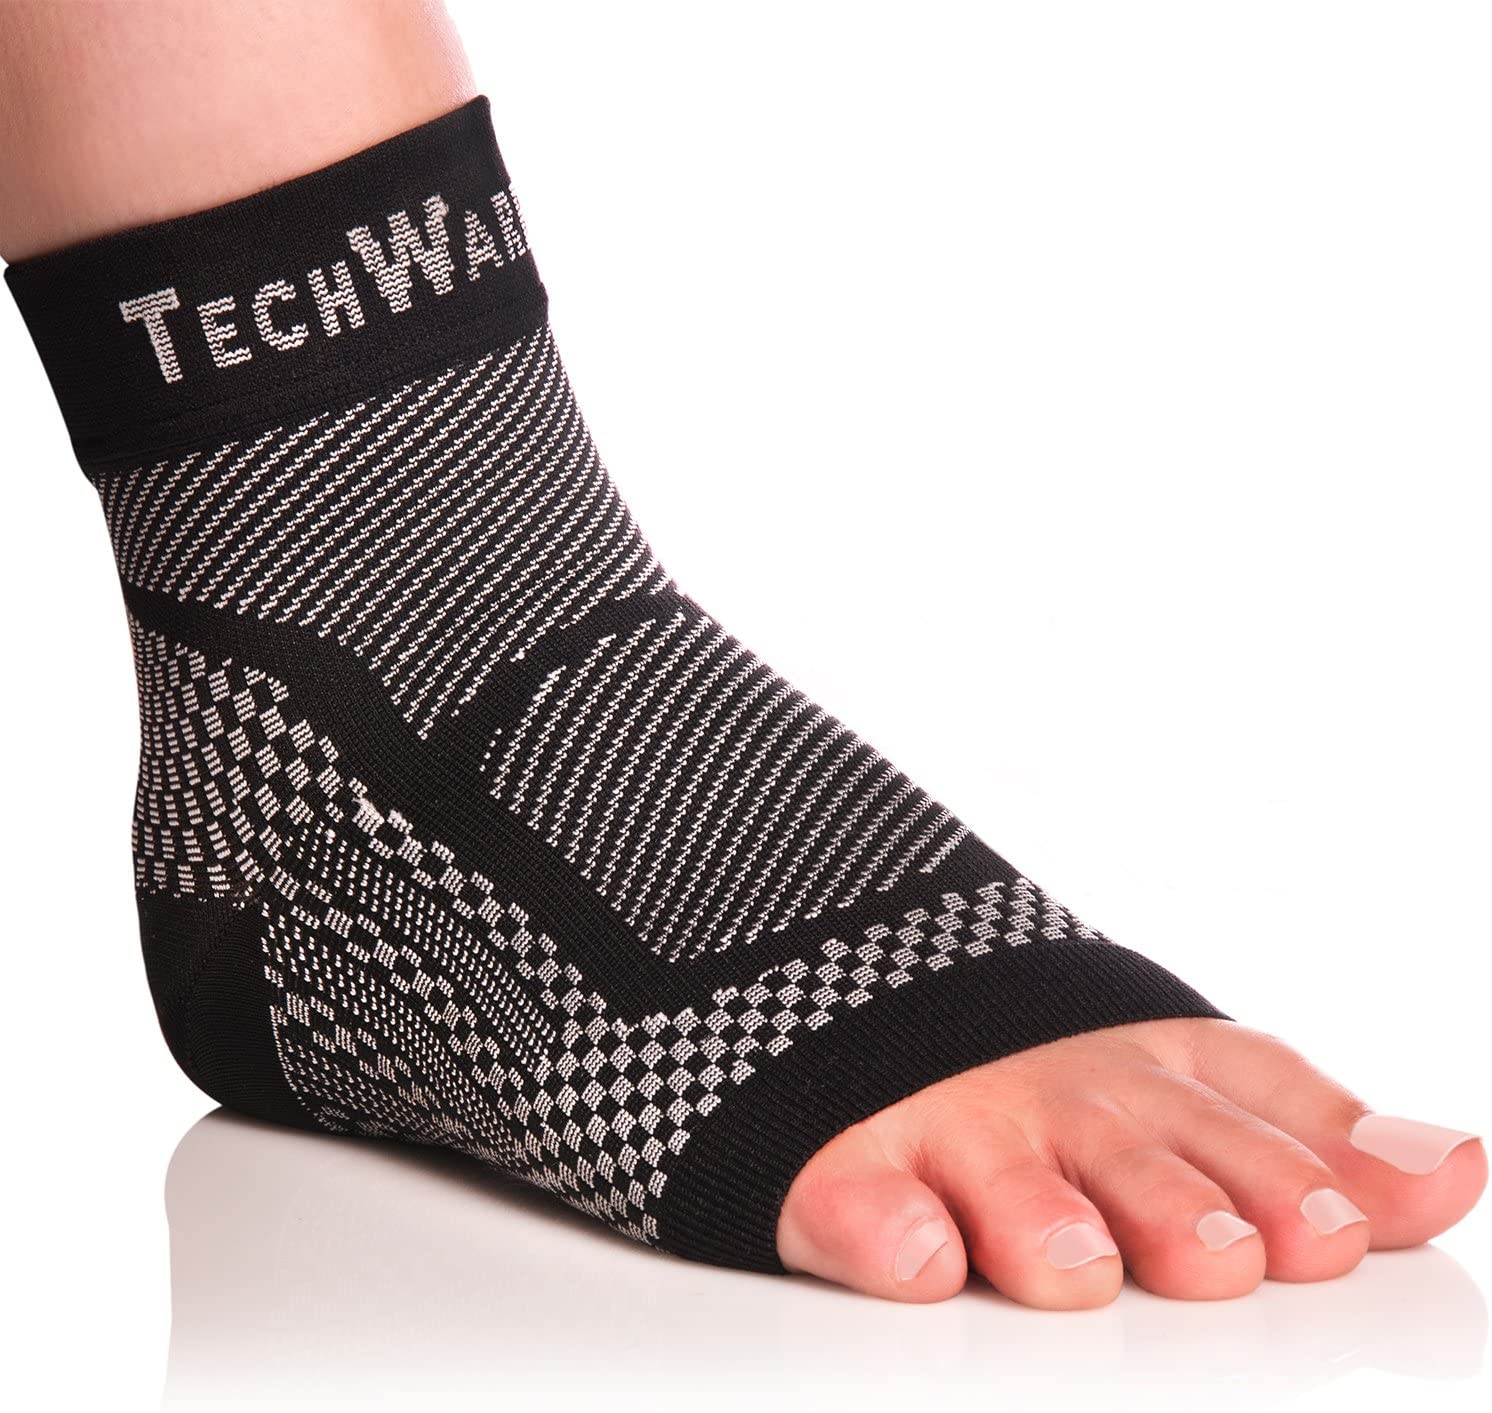 TechWare Pro Ankle Brace